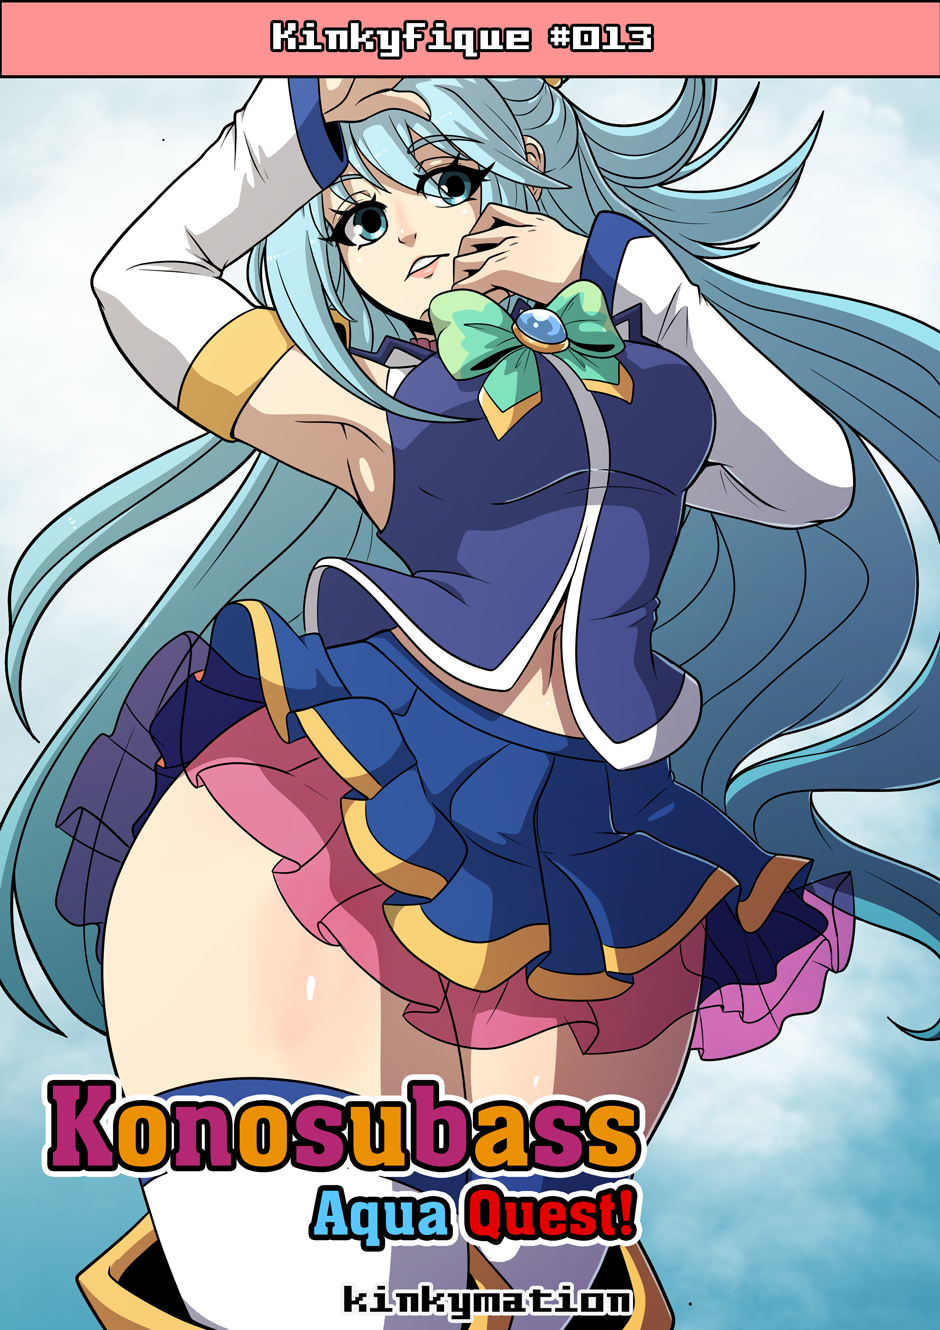 [Kinkymation] – Konosubass – Aqua Quest! - 1